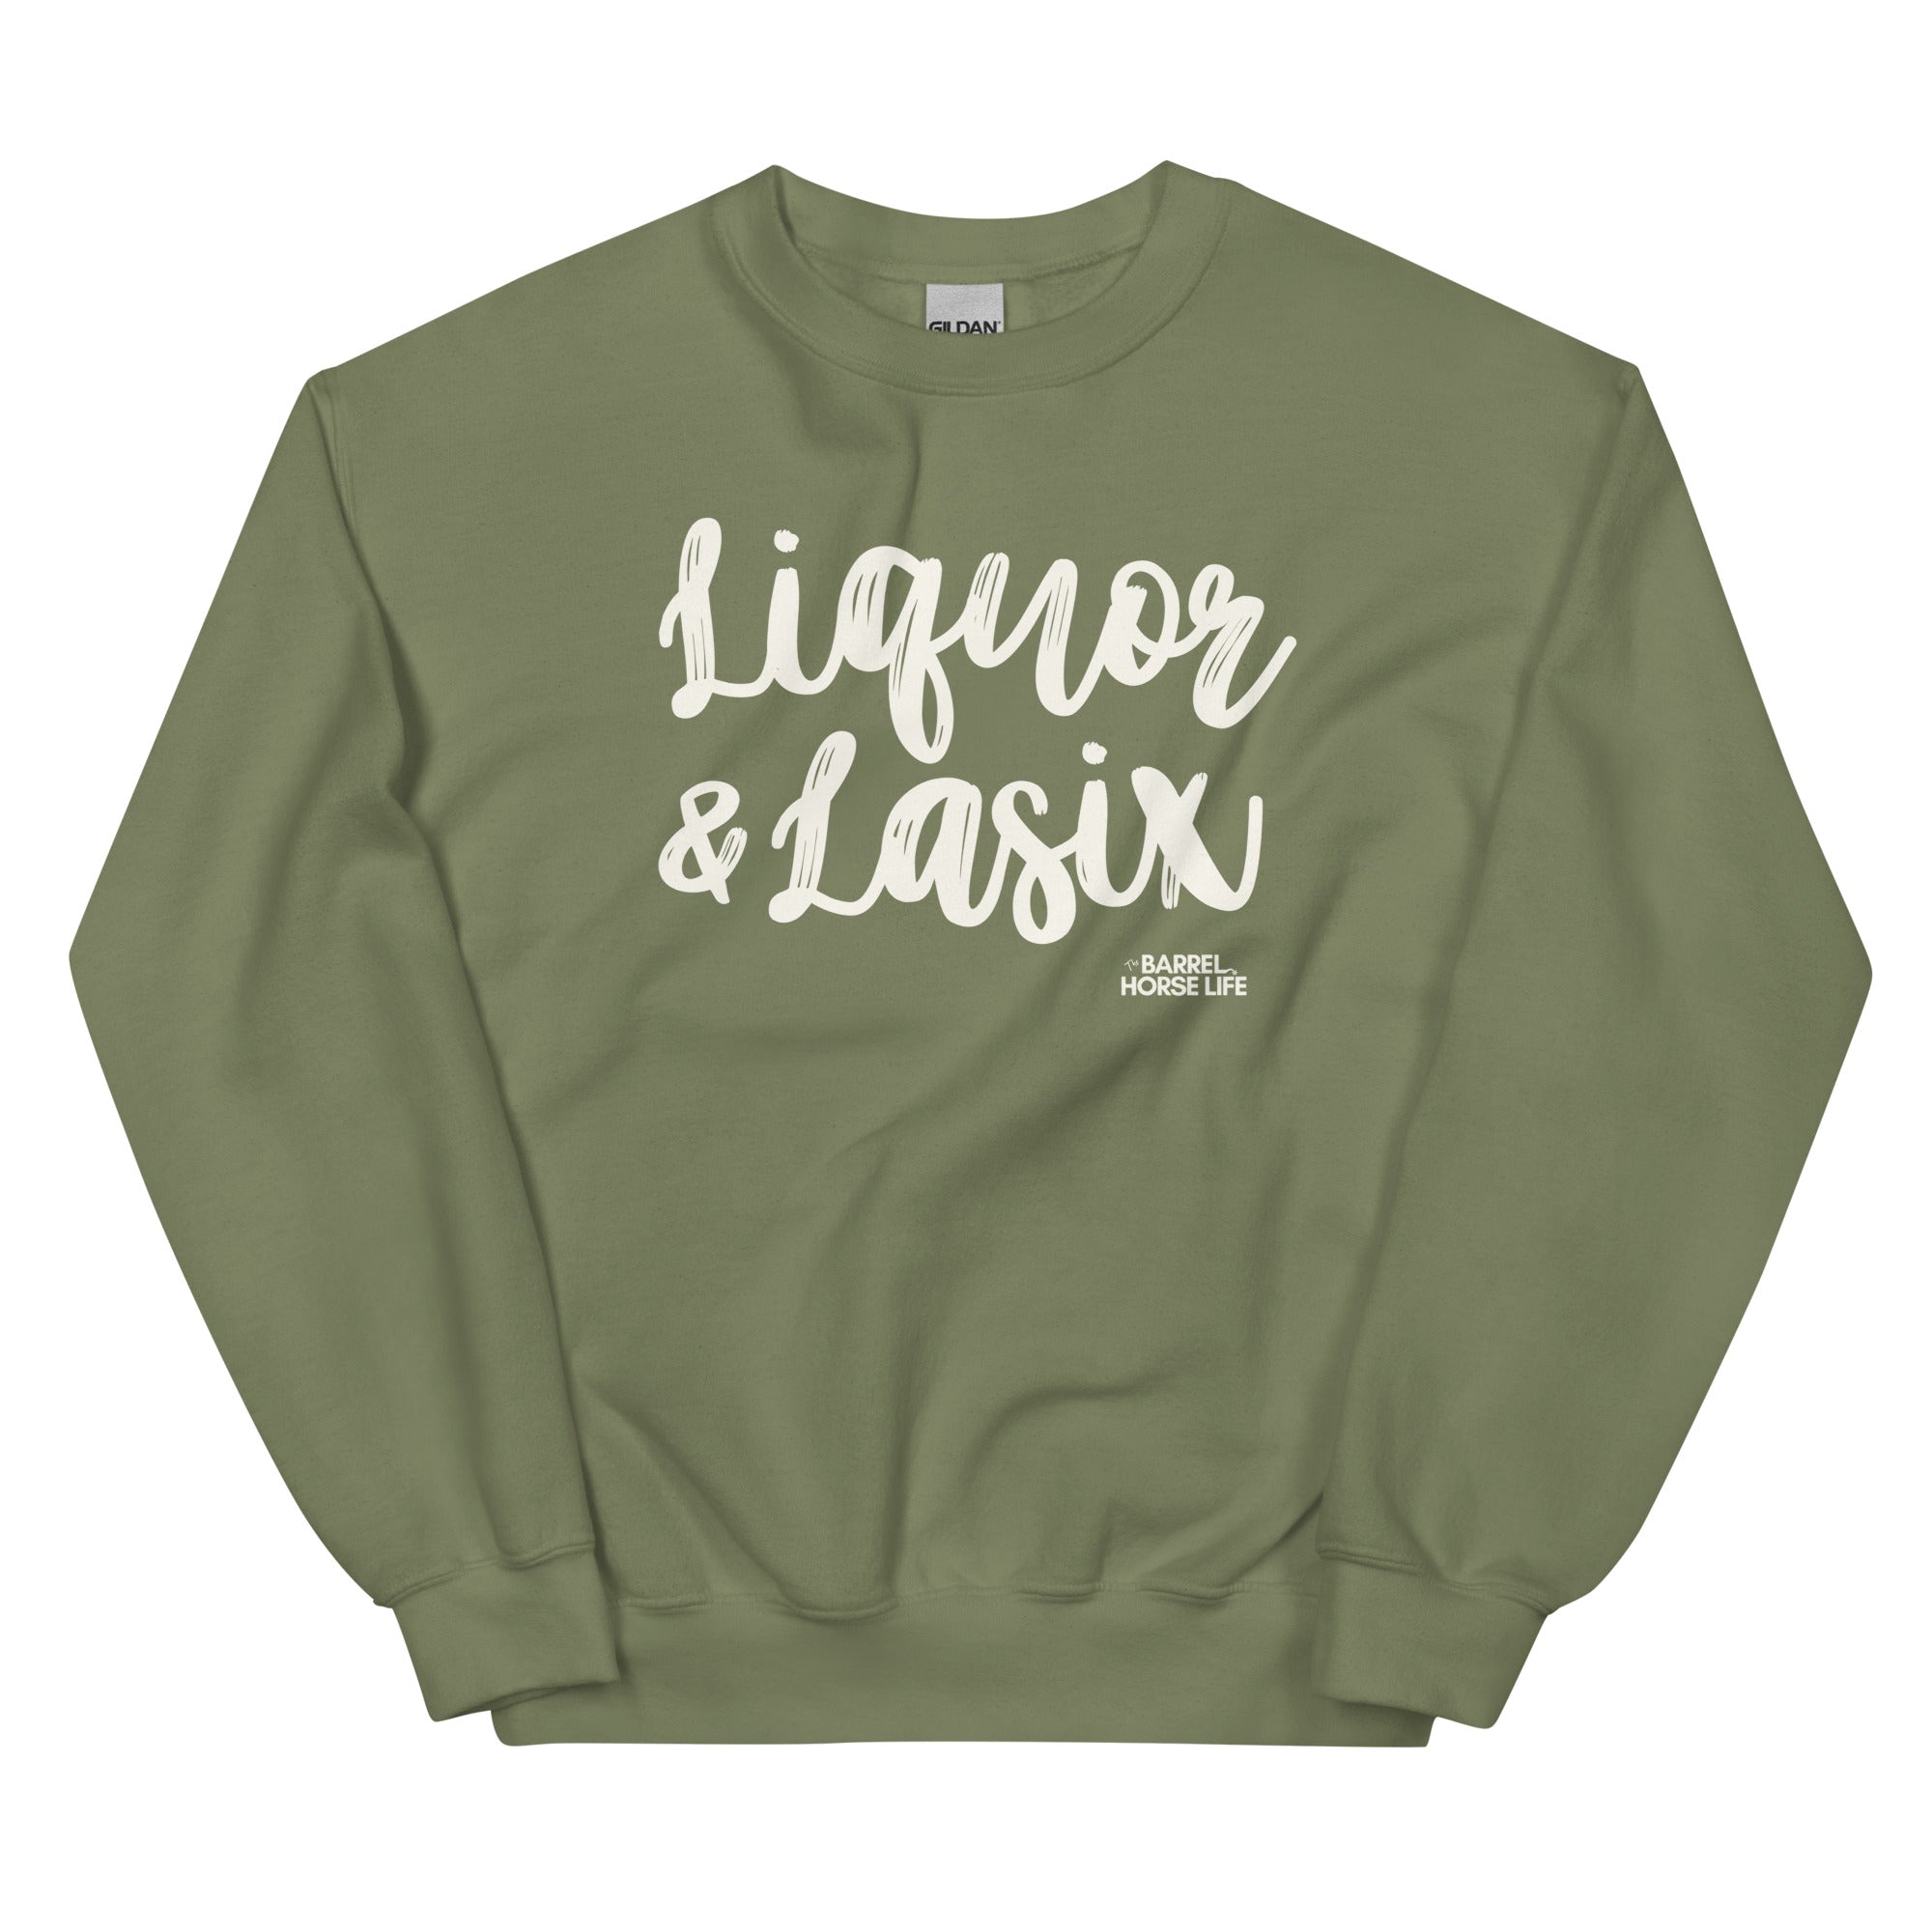 Liquor & Lasix, Crewneck Sweatshirt